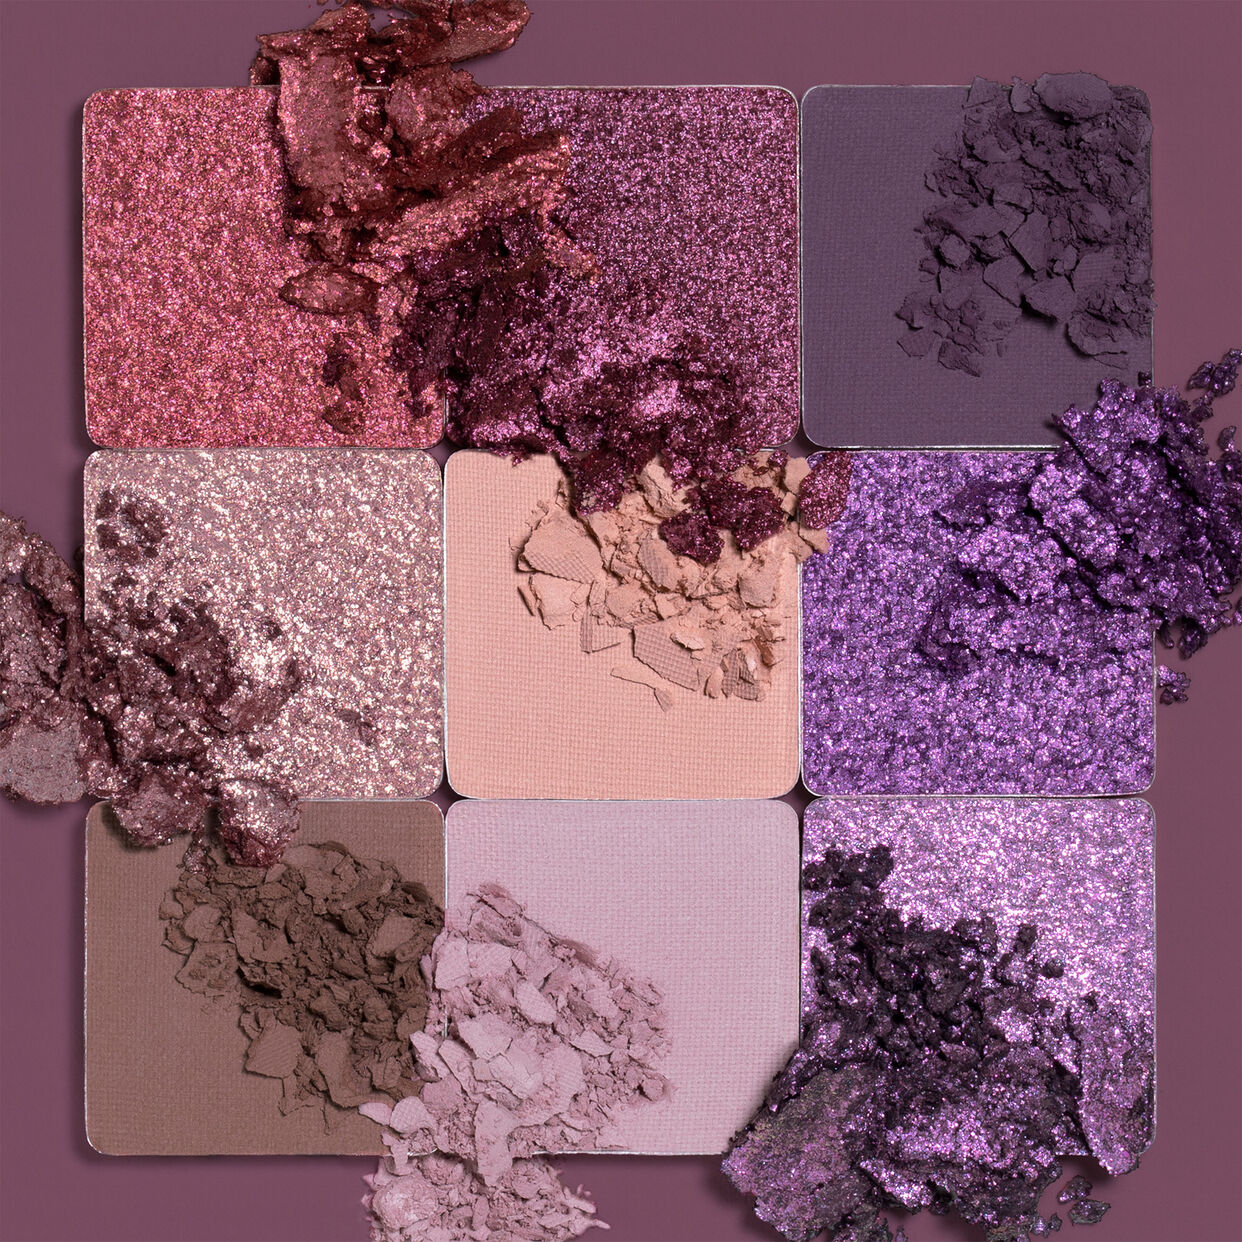 HAZE Obsessions Palettes - Purple Huda Beauty